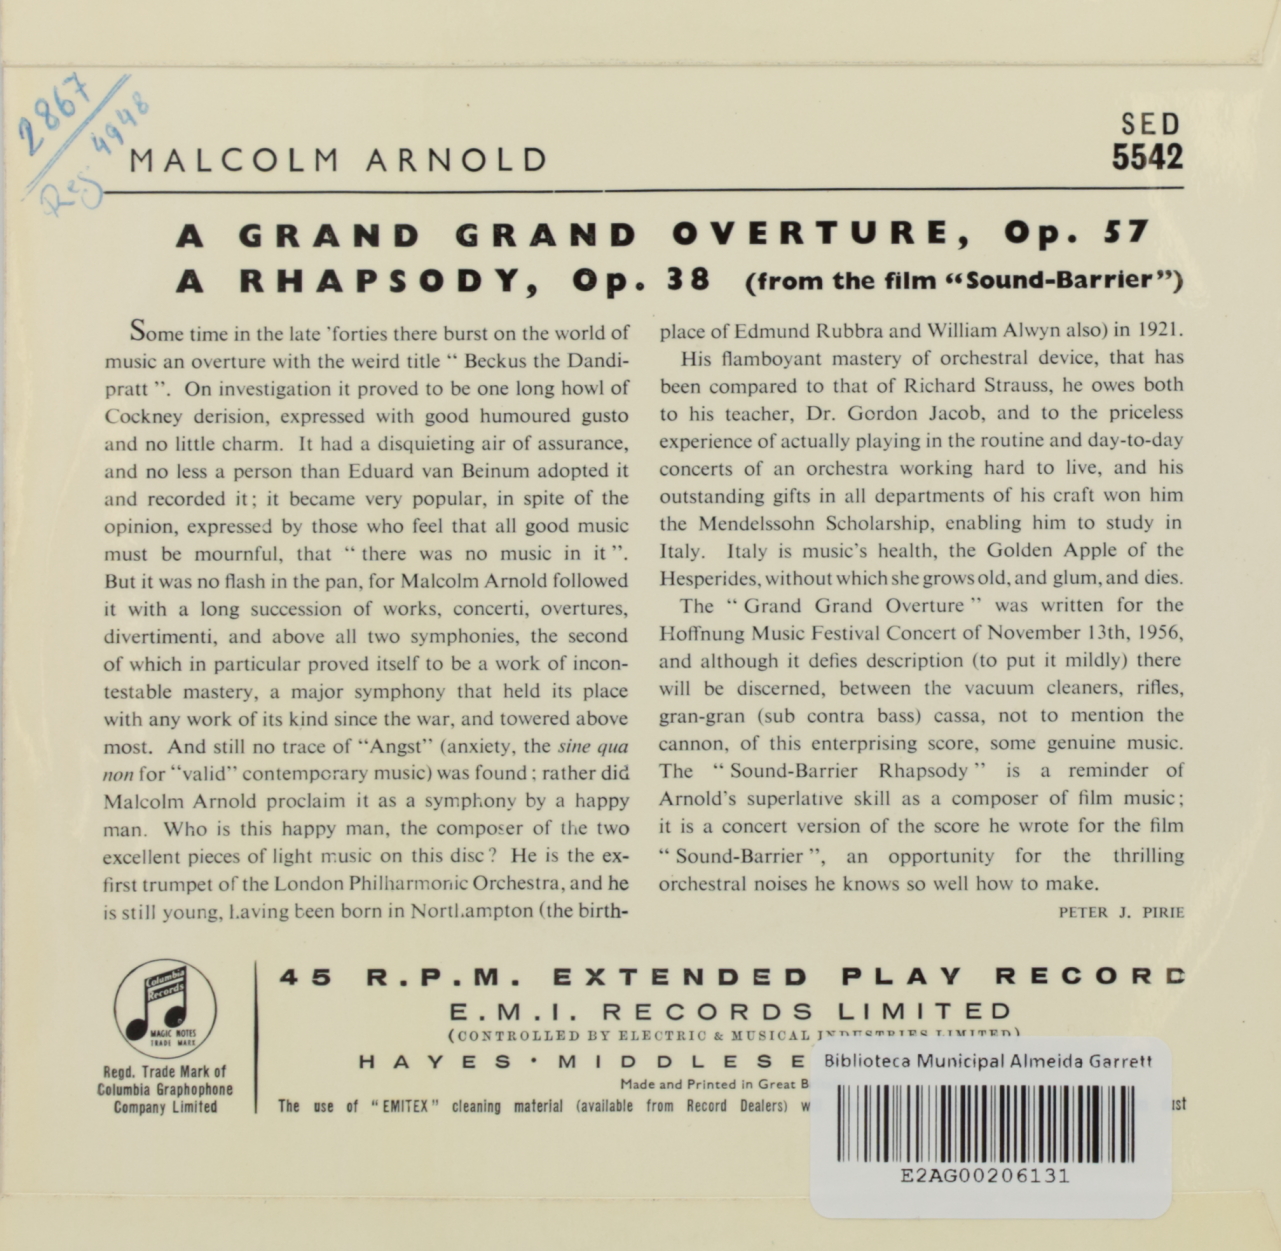 Arnold: A grand, grand overture